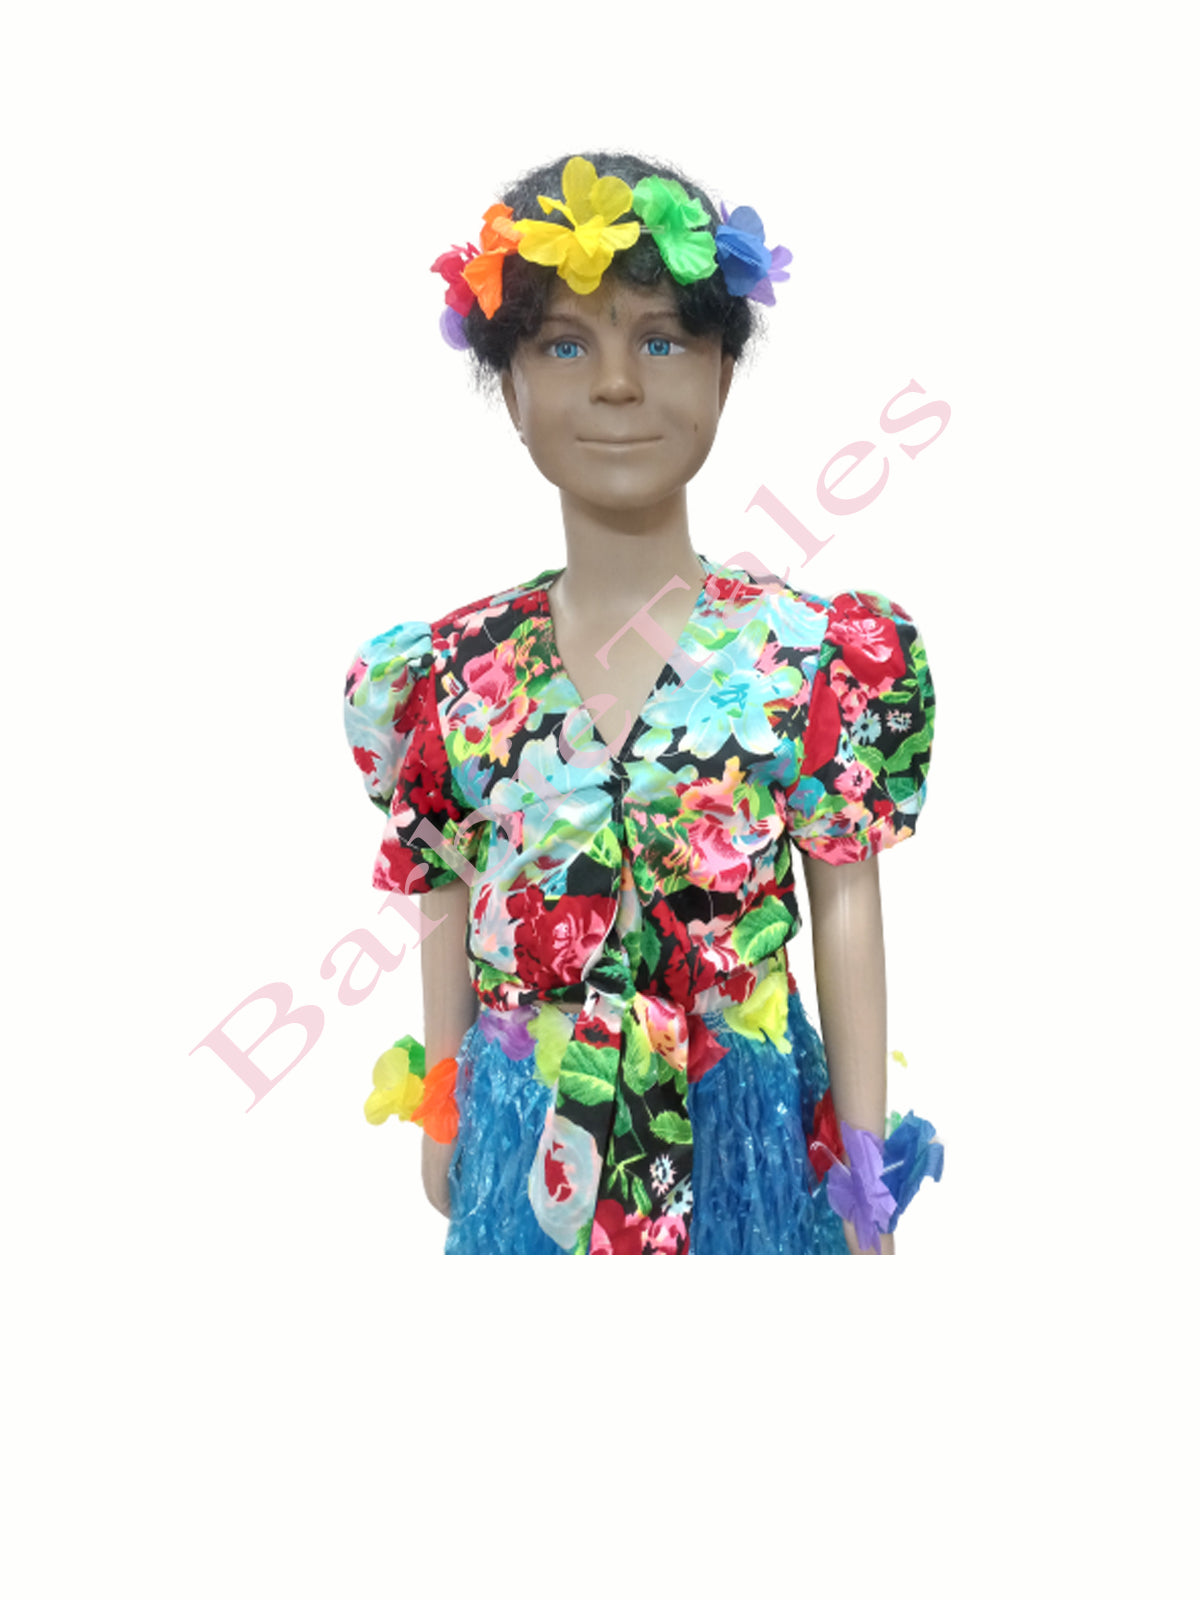 Shri Nikunj Goa Girl Dress/Costume For Kids : Amazon.in: Fashion